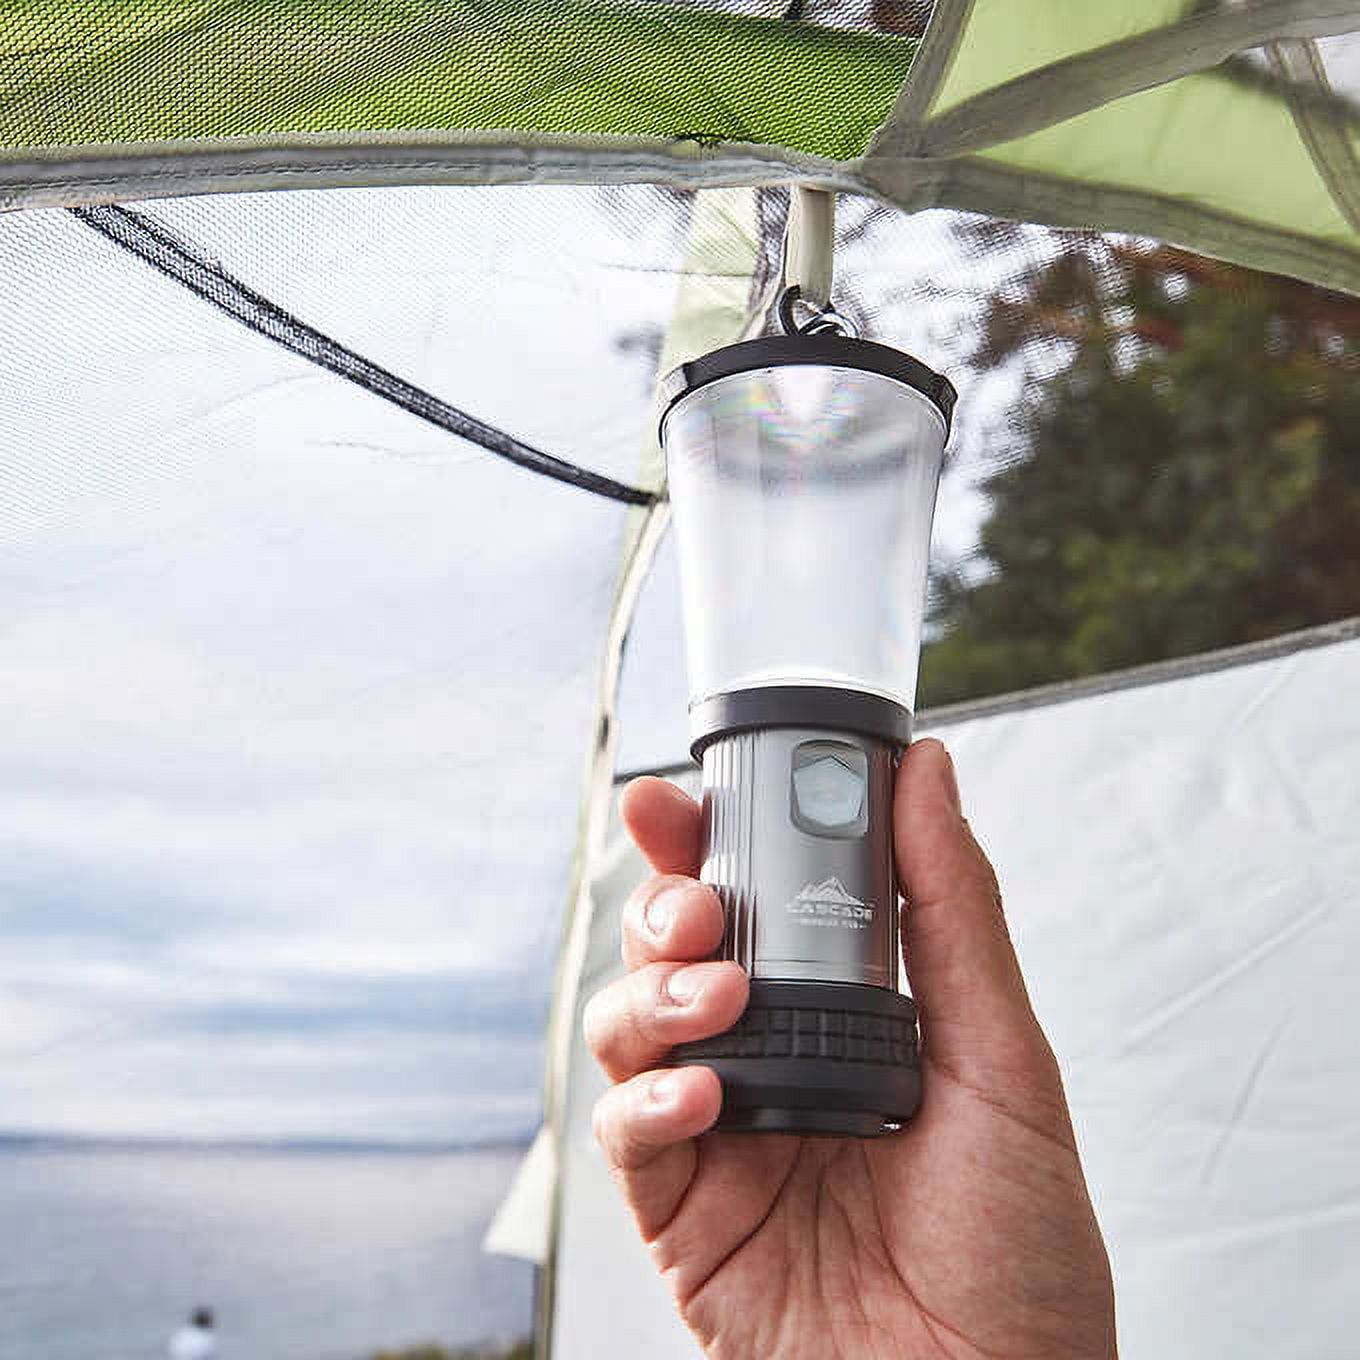 Compact Aluminum Lantern (2-Pack) – Cascade Mountain Tech